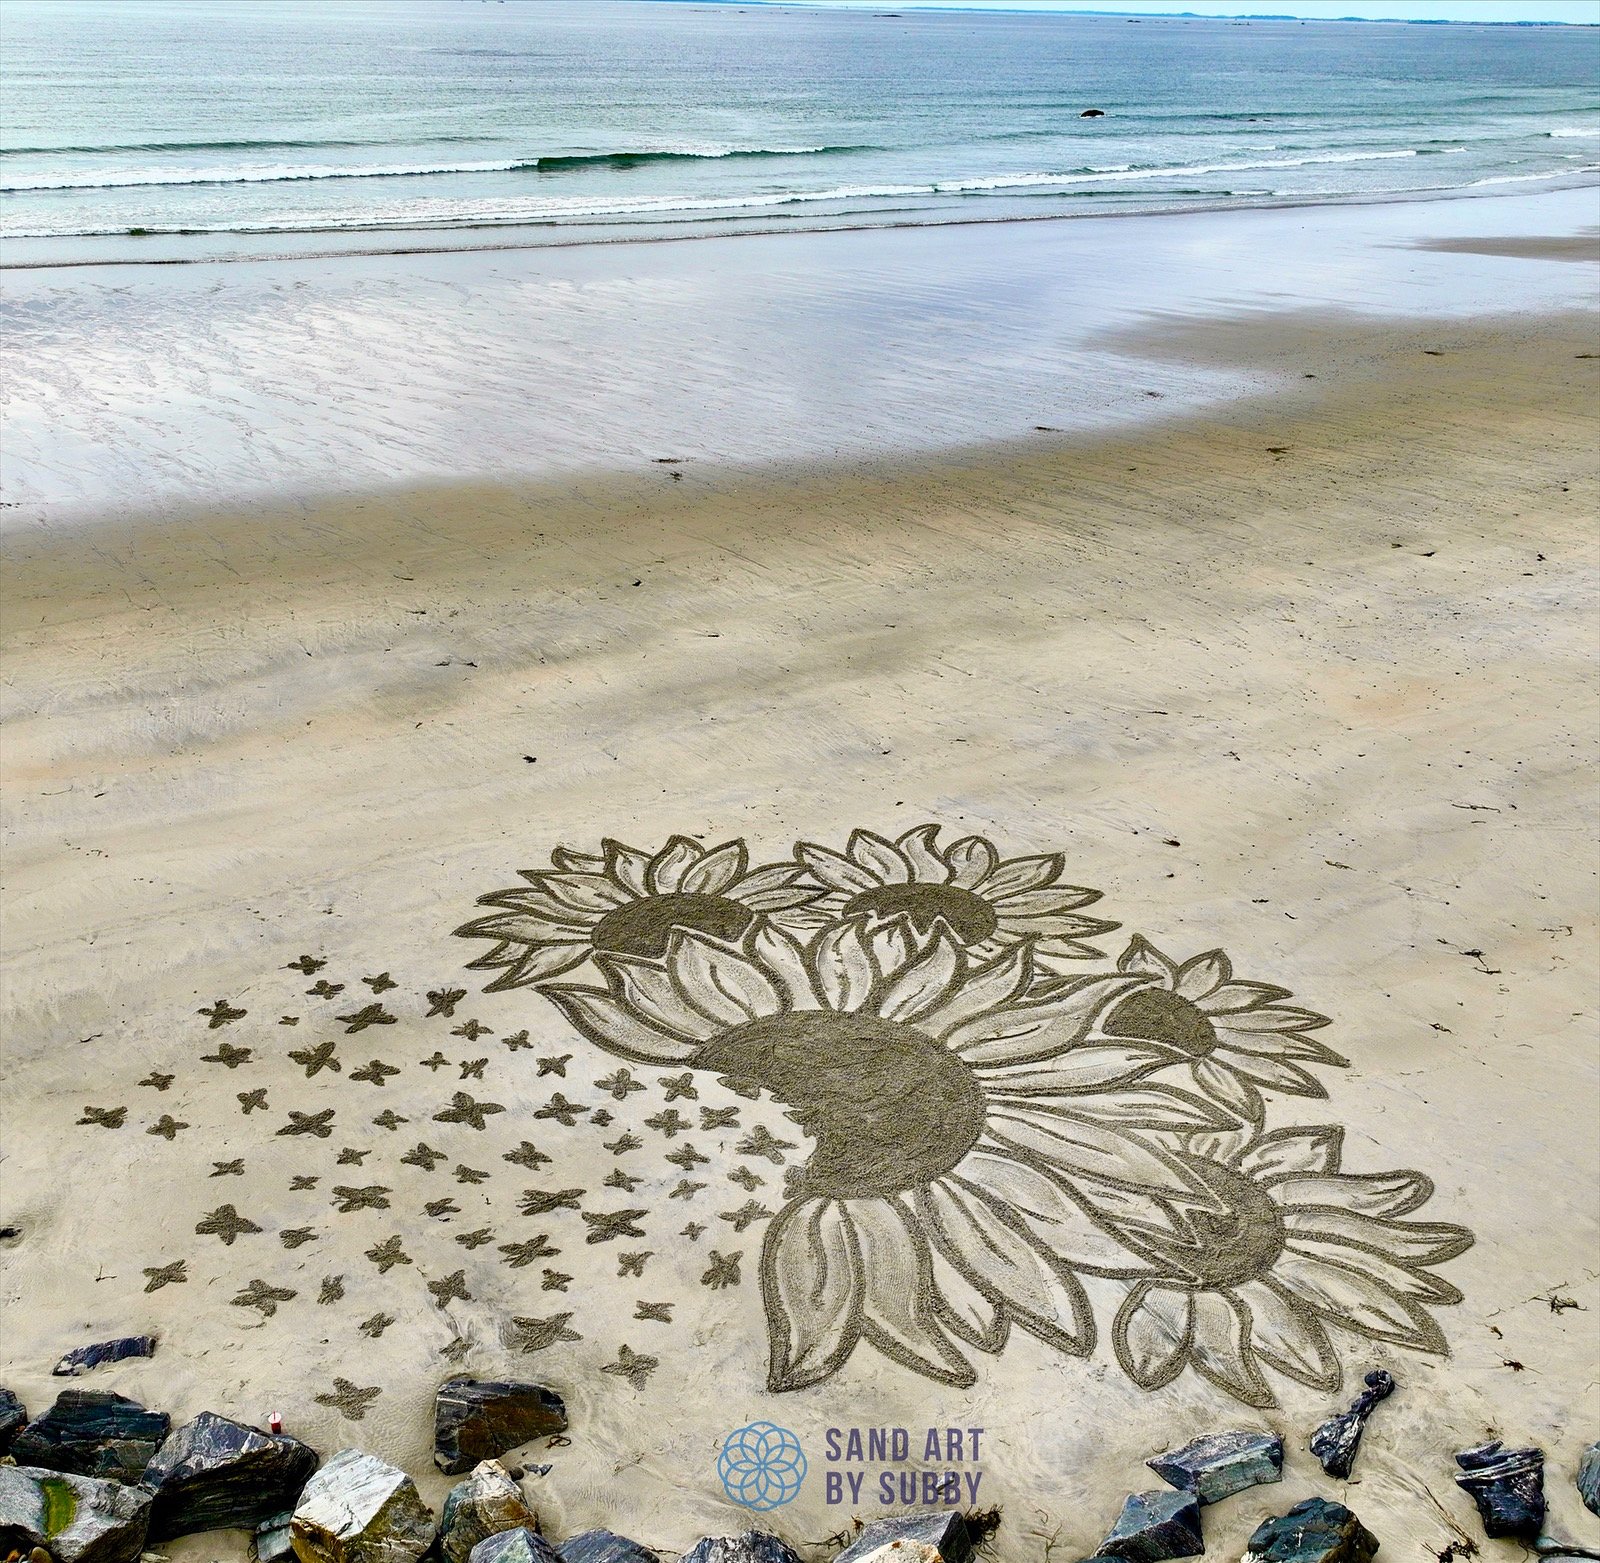 Hampton Beach NH artist creates huge sand paintings that wash away